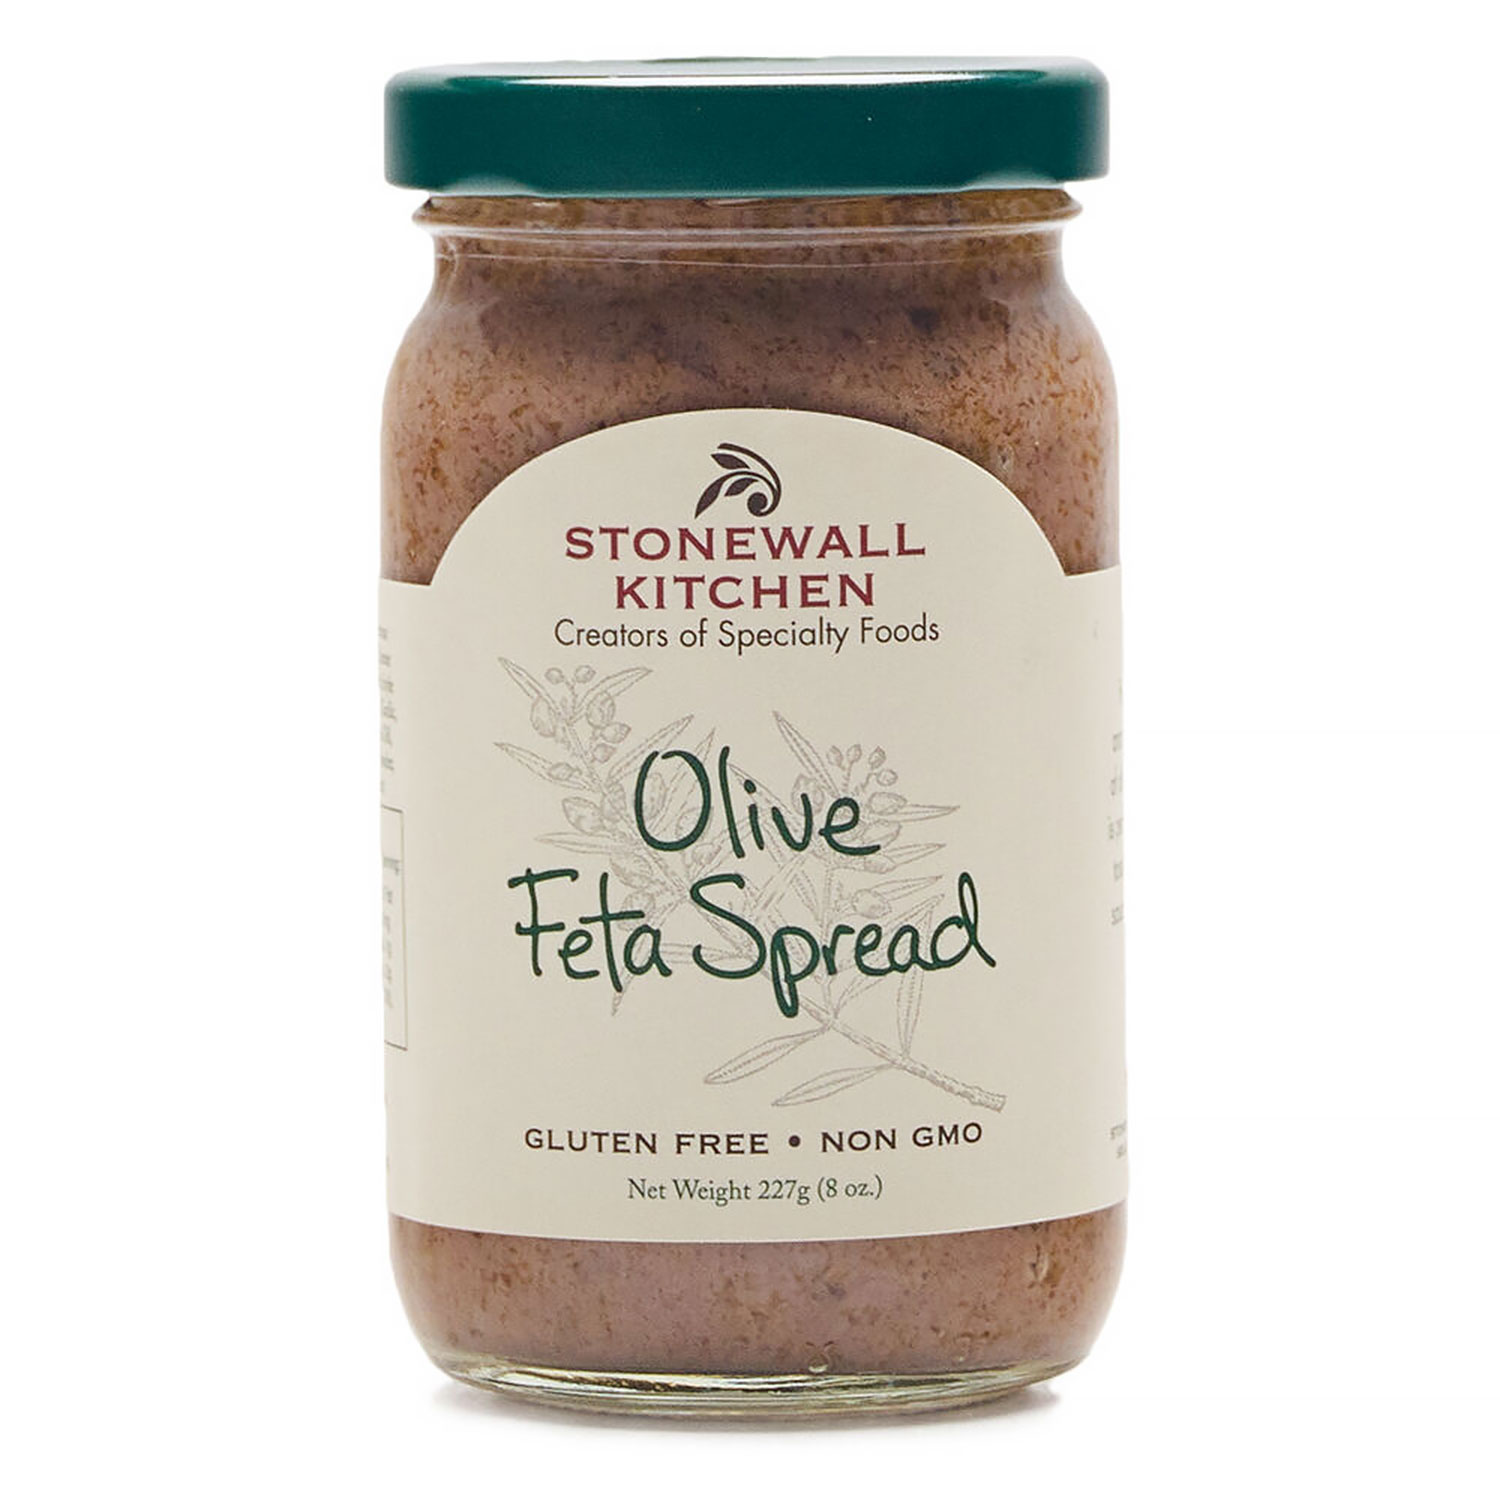 Olive Feta Spread by Stonewall Kitchen